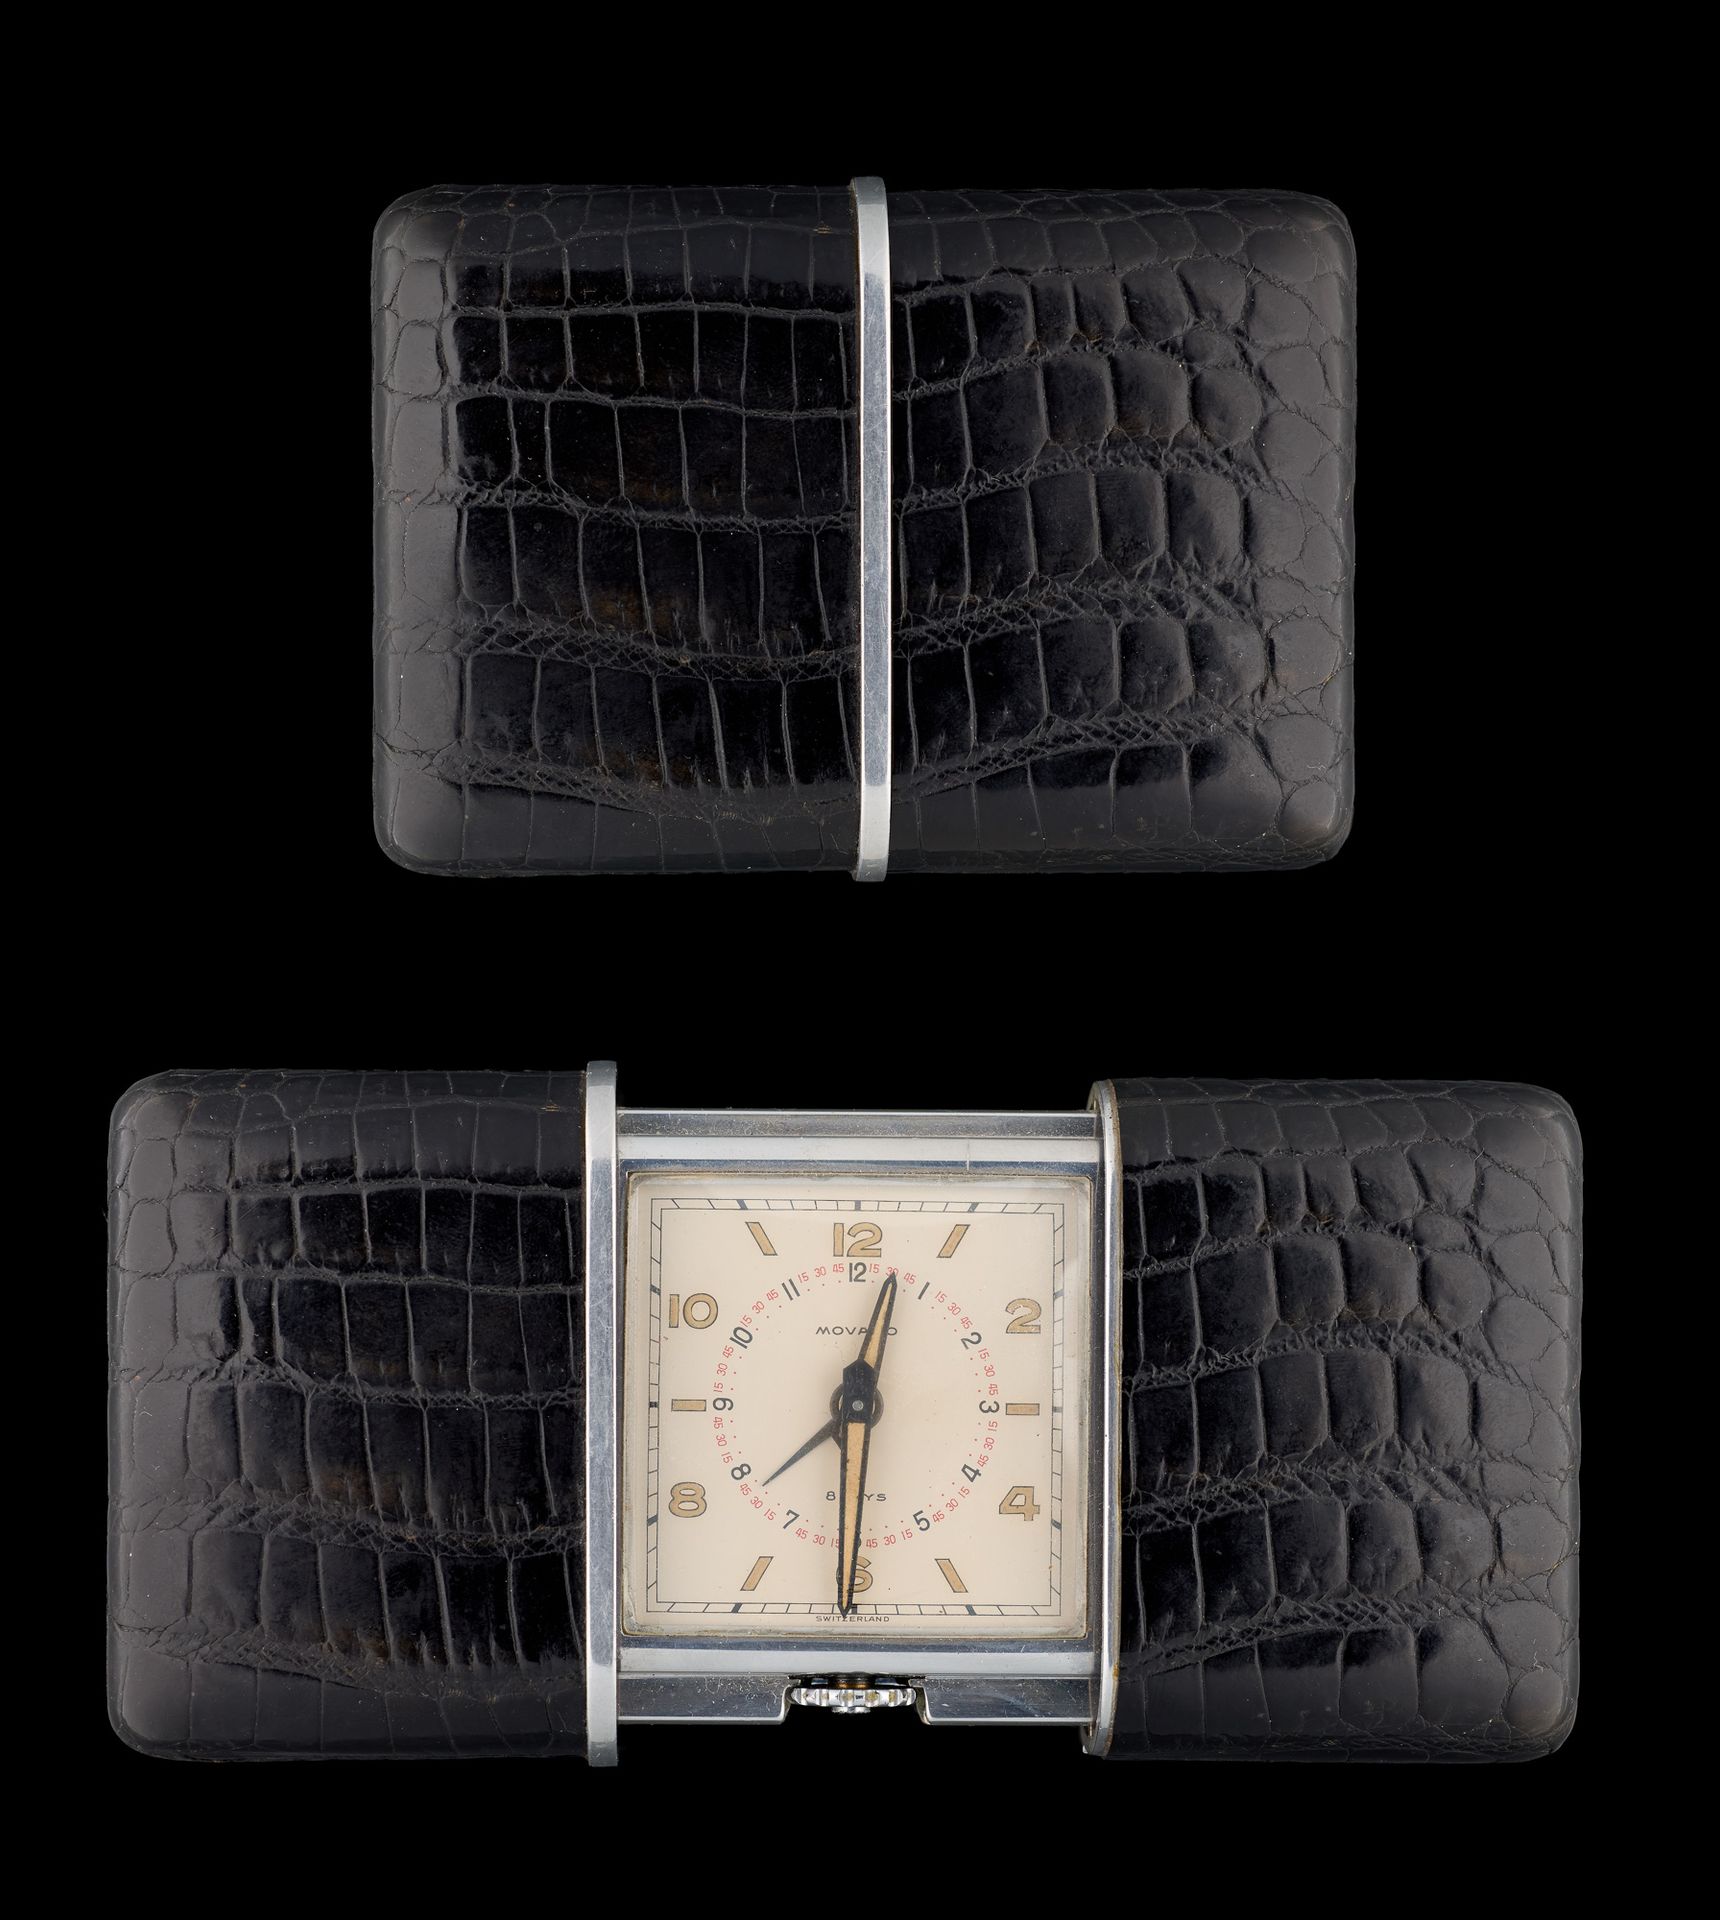 MOVADO. 钟表：皮箱中的旅行闹钟。

摩凡陀品牌，表盘上有8天提及。